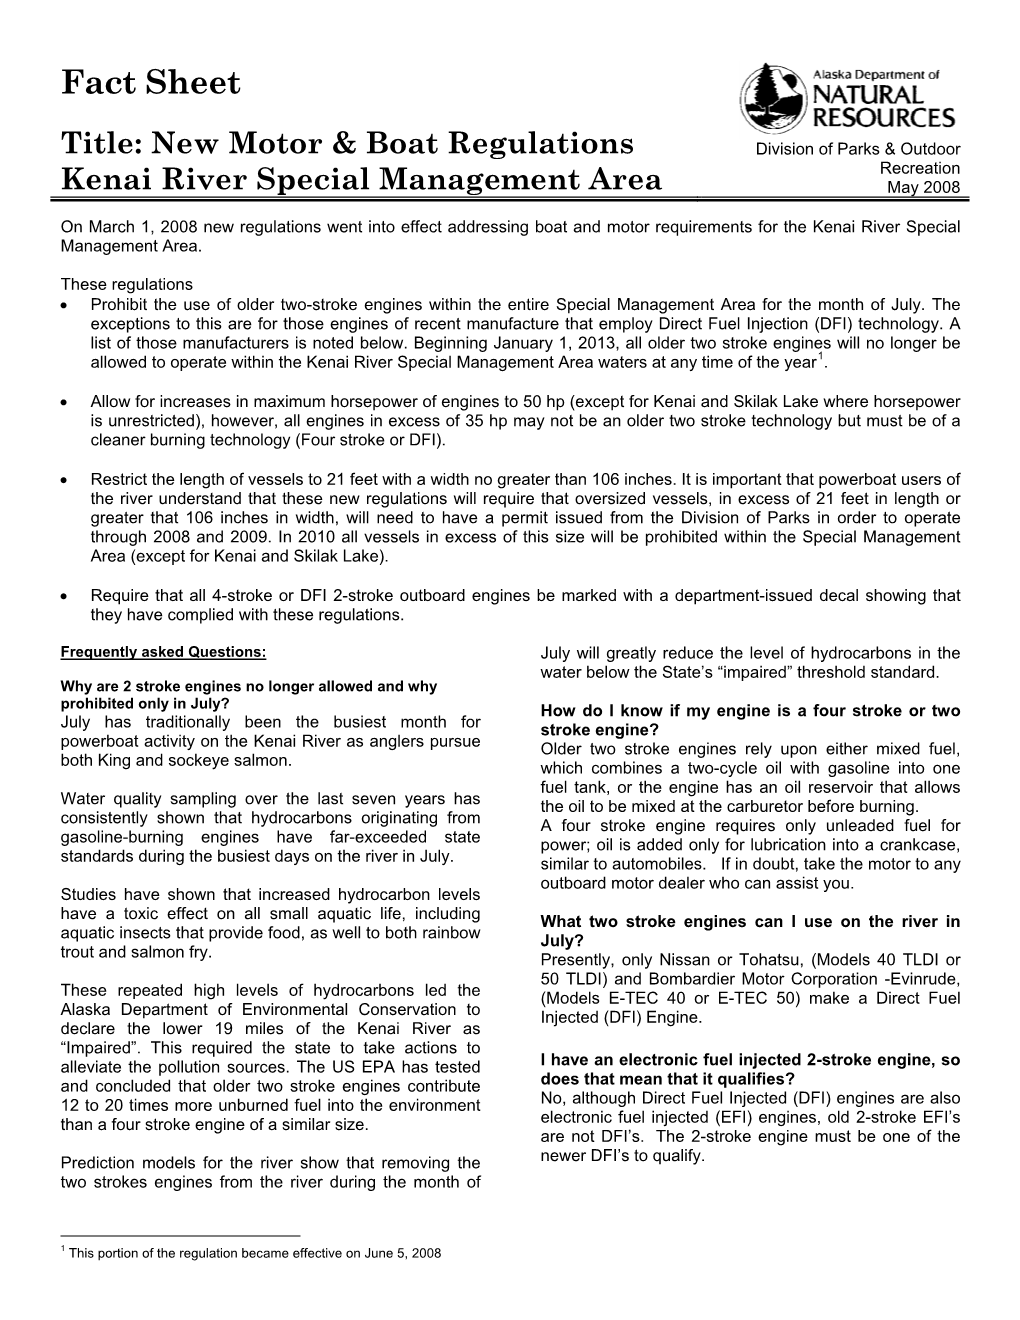 Fact Sheet Title: New Motor & Boat Regulations Kenai River Special